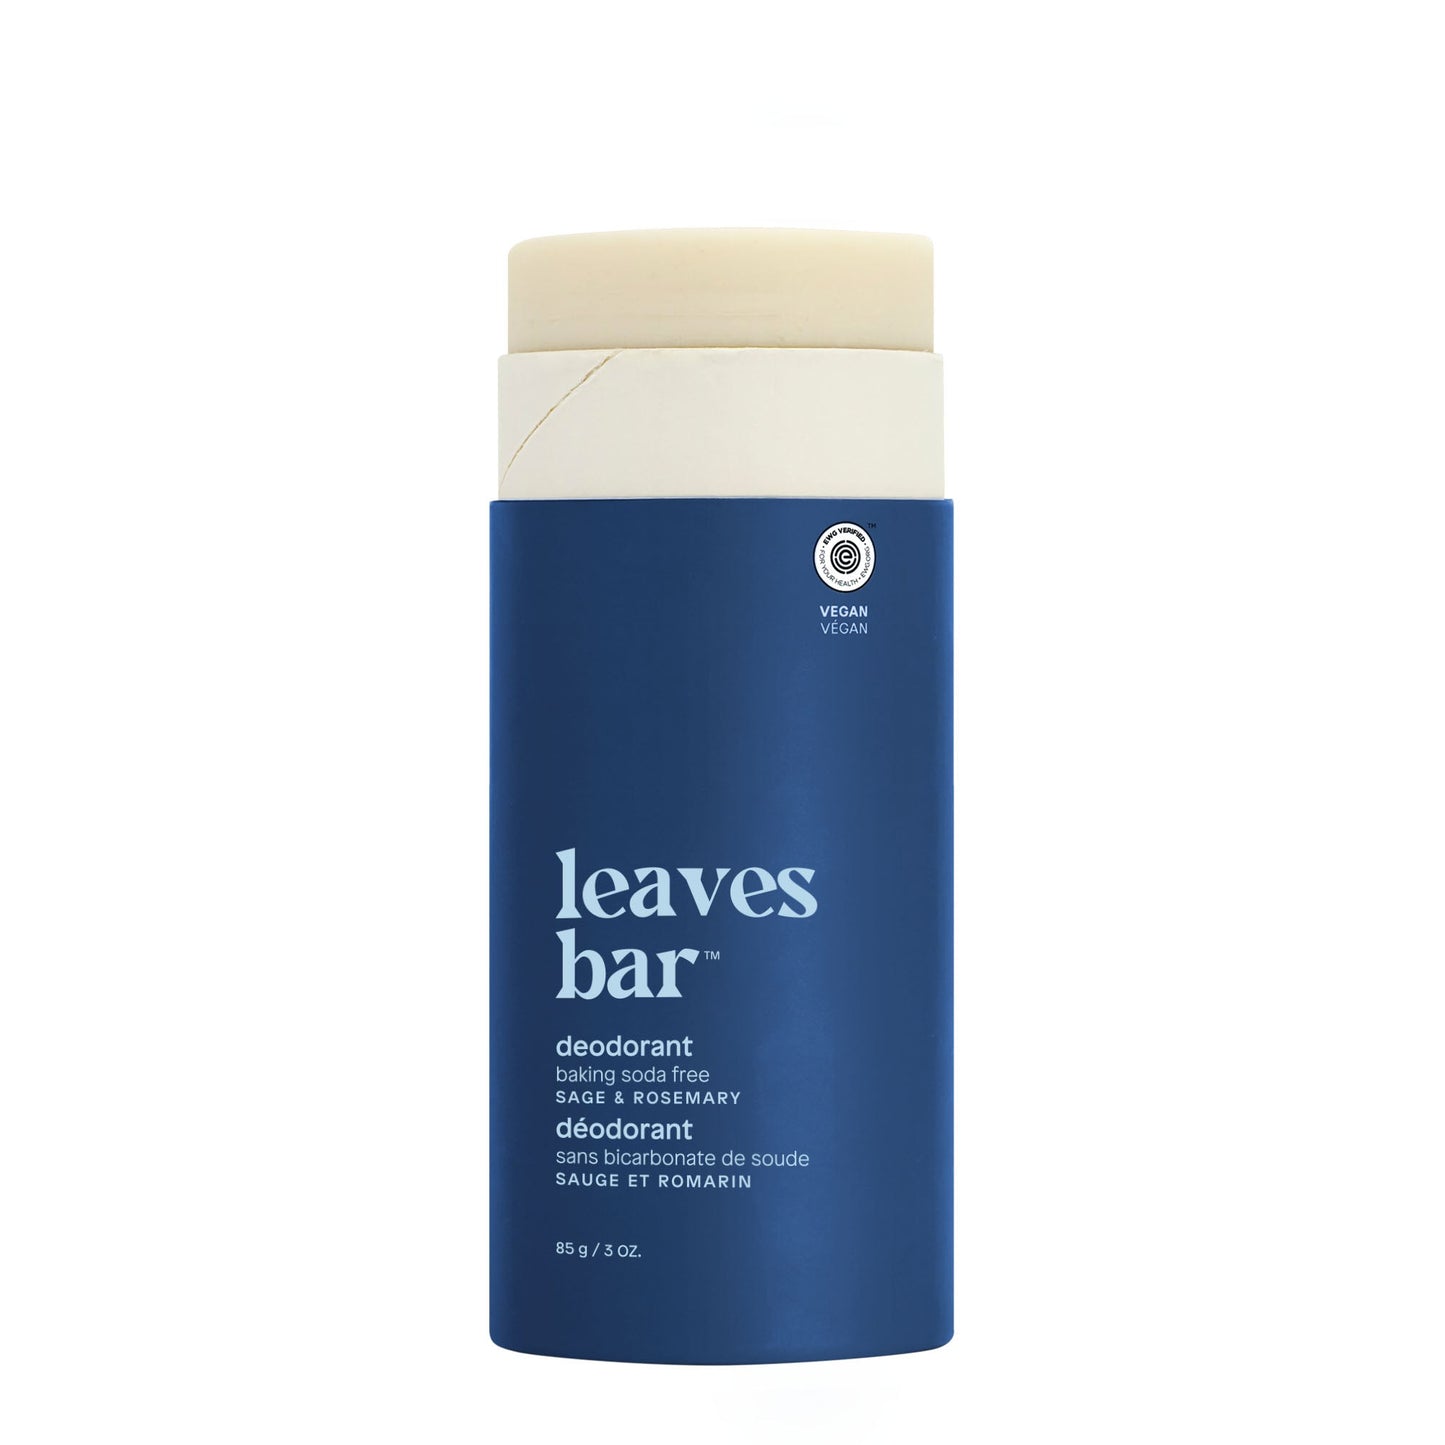 ATTITUDE deodorant leaves bar plastic-free 17124-btob_en?_hover? Sage & rosemary